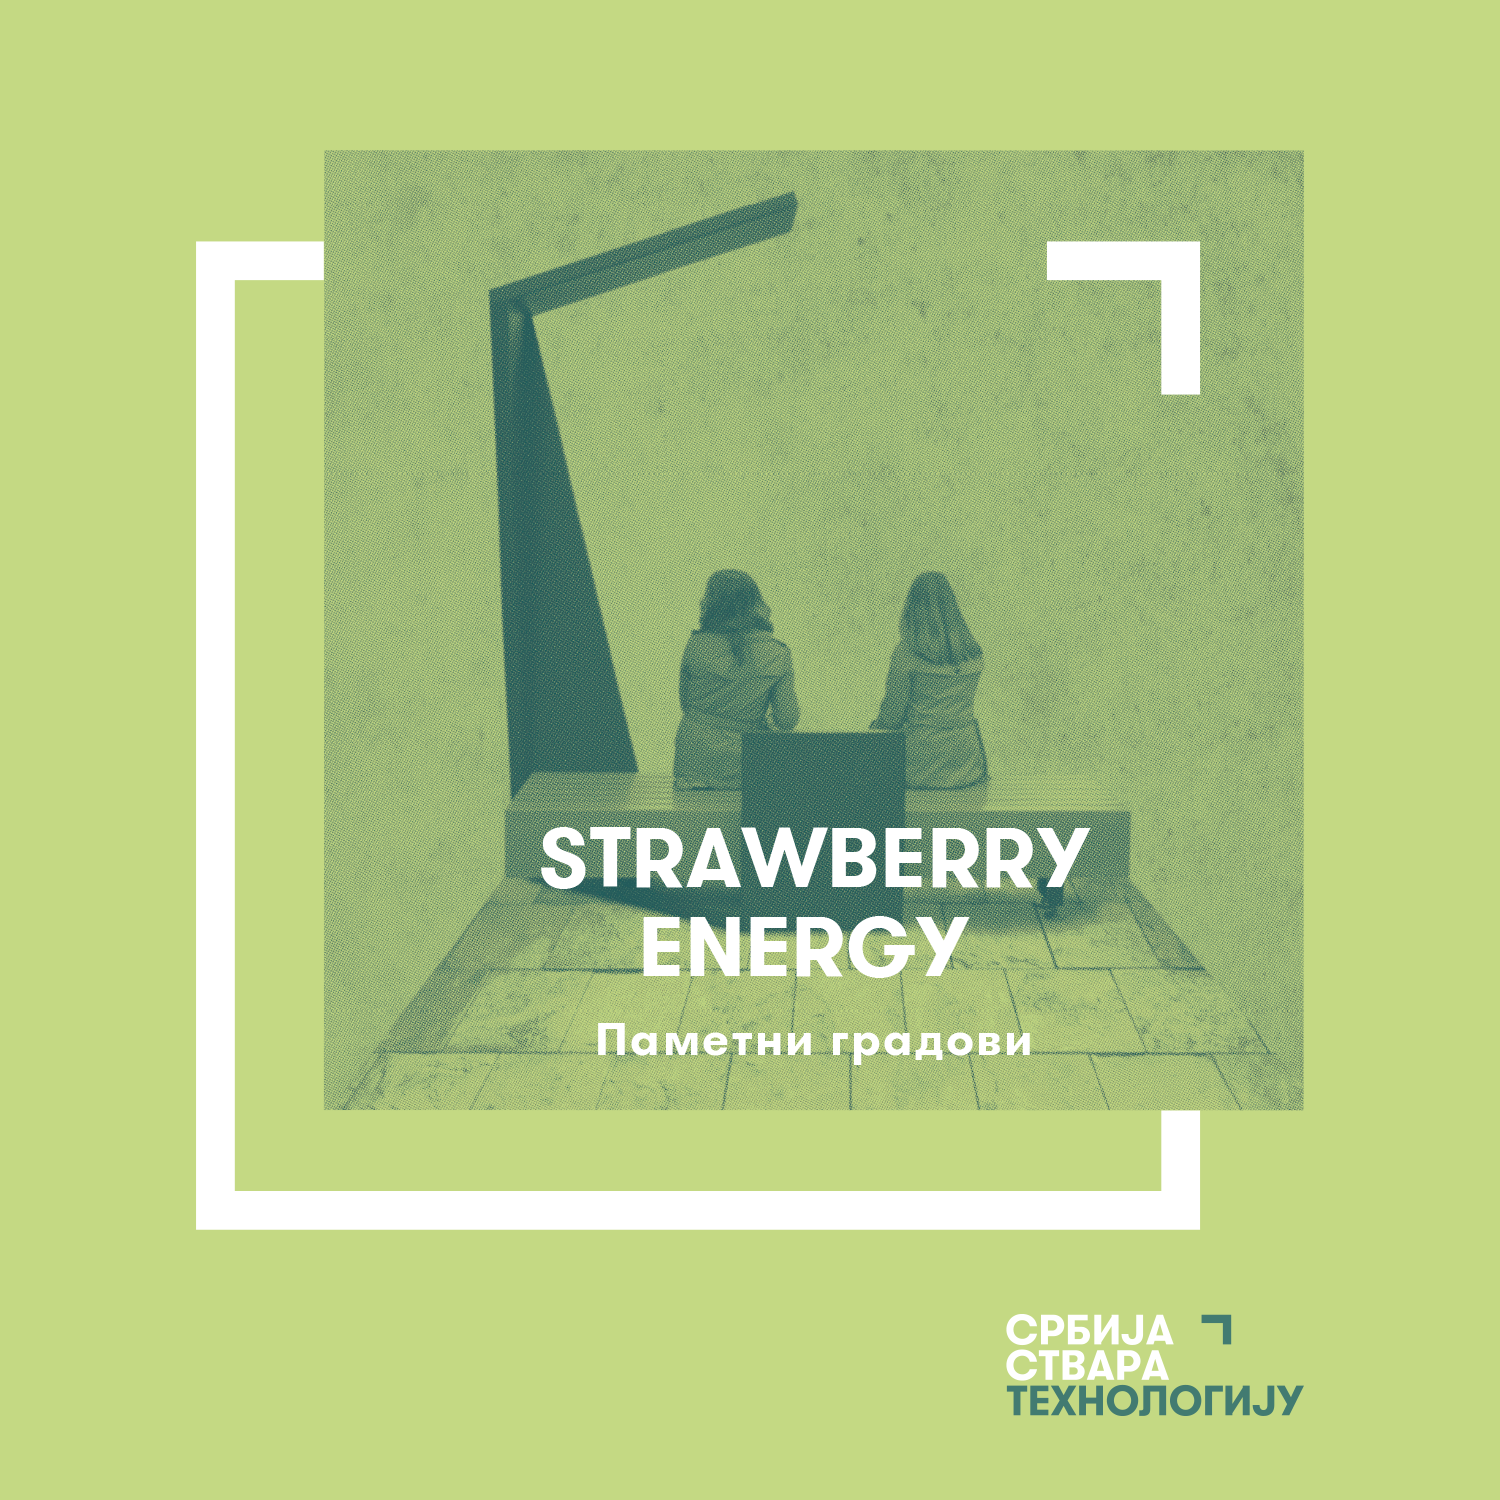 CREATIVE AMBASSADORS OF SERBIA: Strawberry Energy